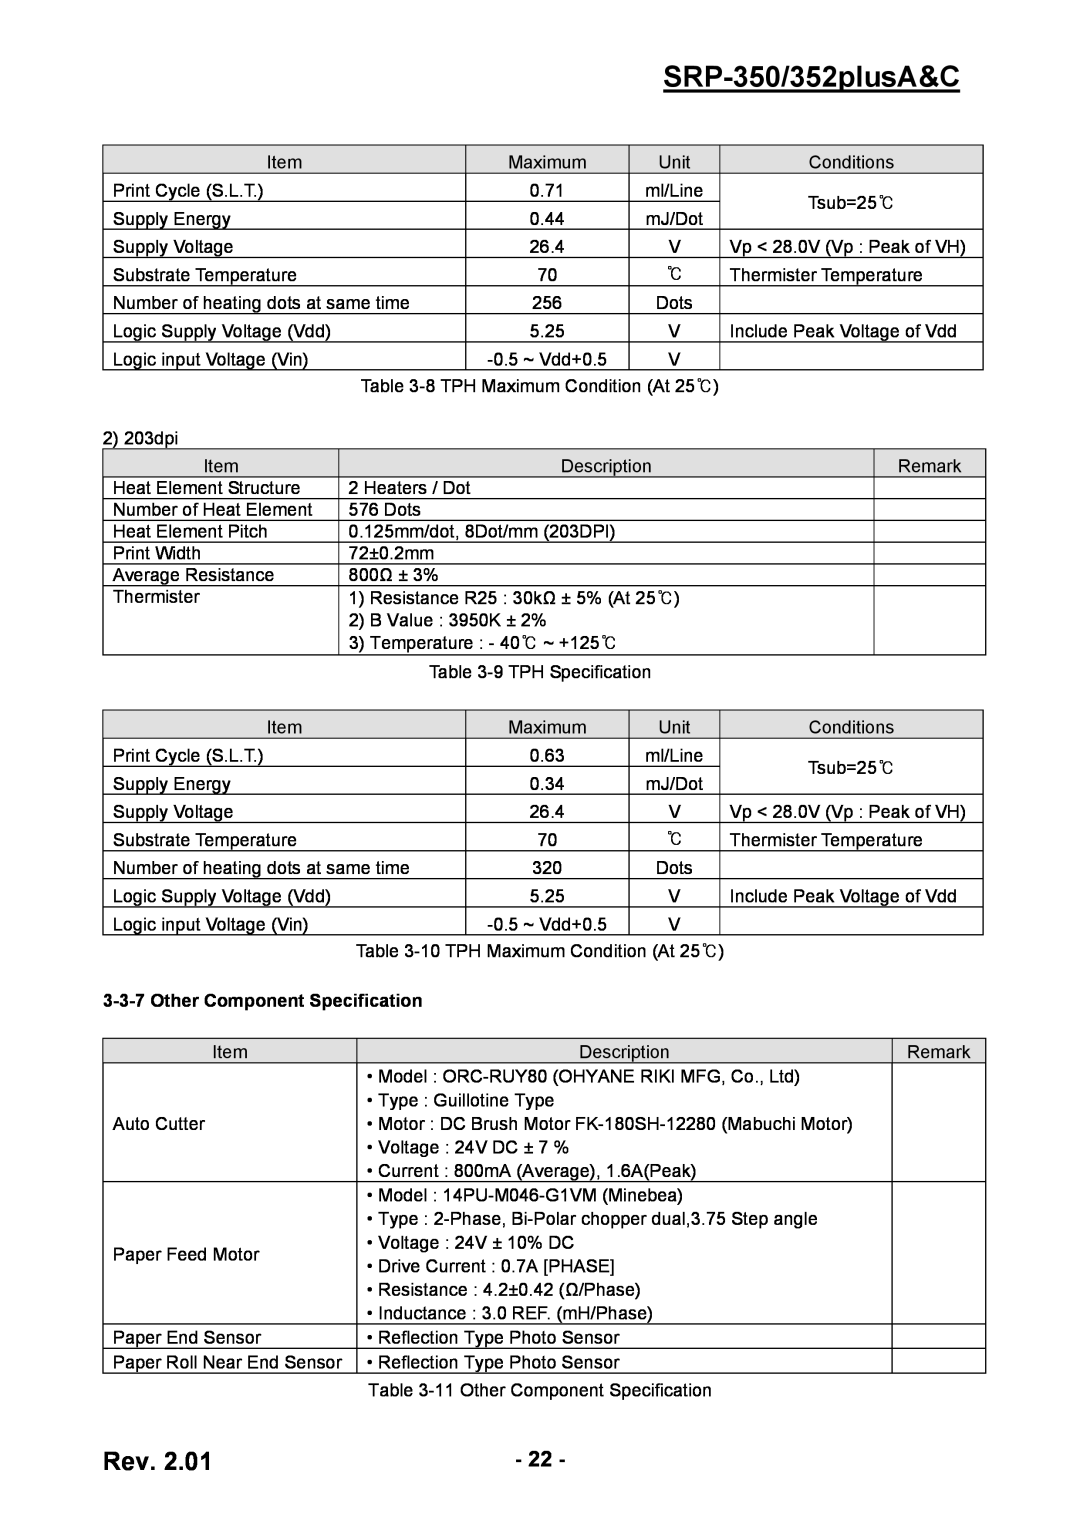 BIXOLON service manual SRP-350/352plusA&C, Other Component Specification 